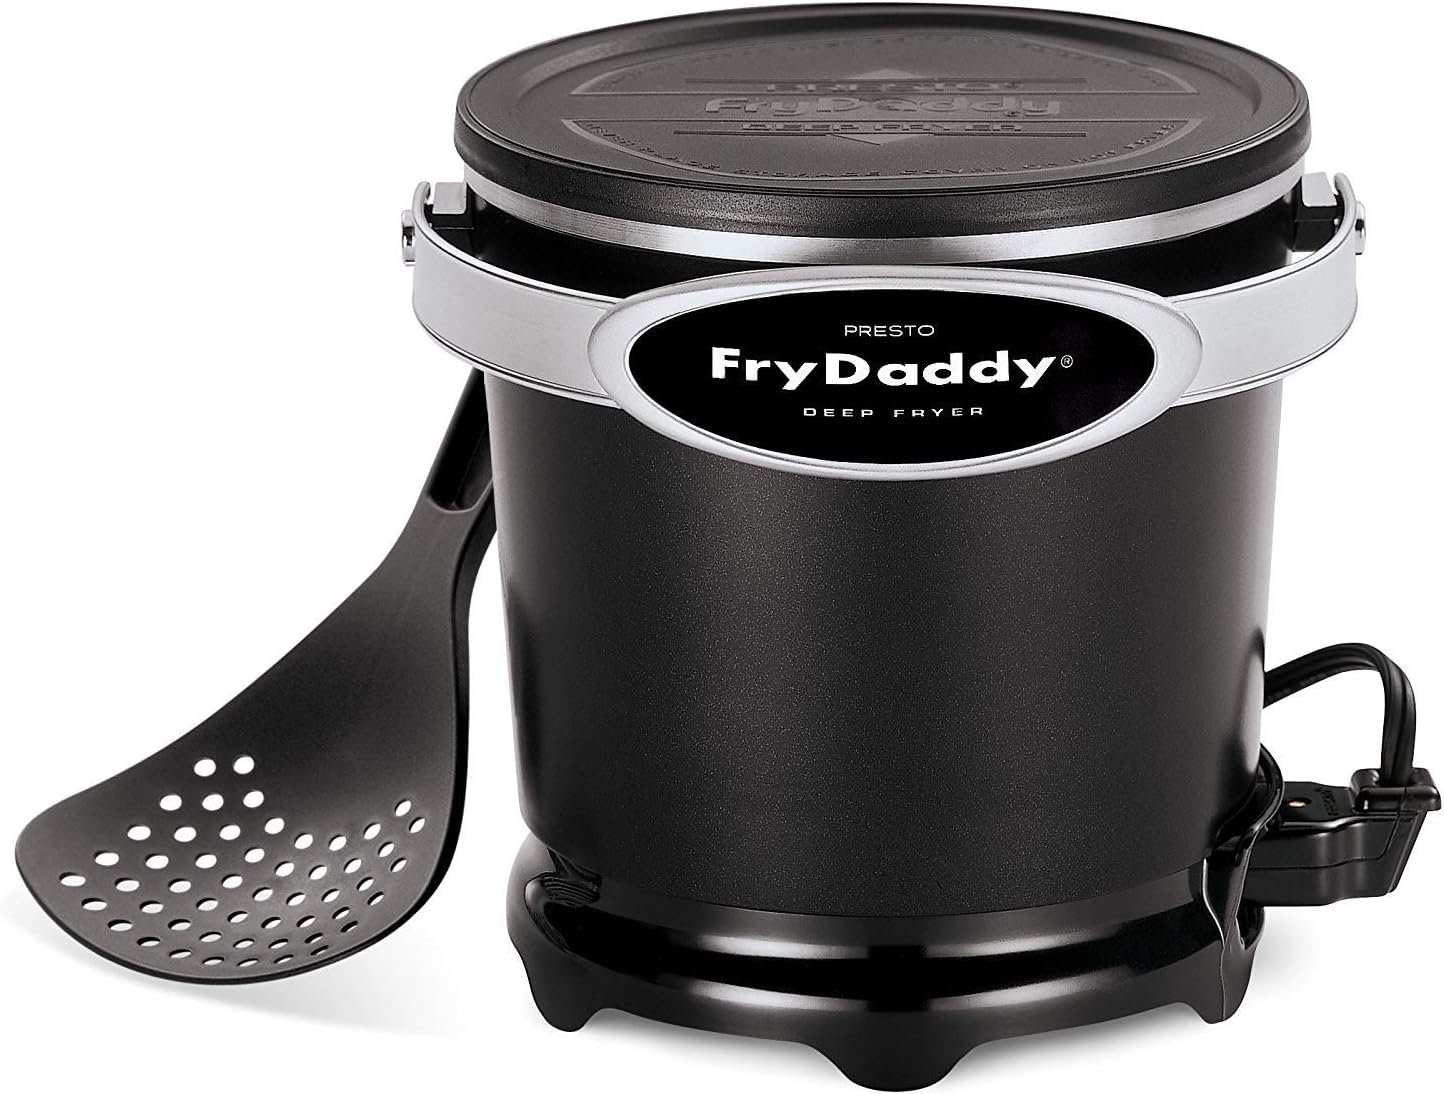 Presto Fry Daddy Electric Fryer Review